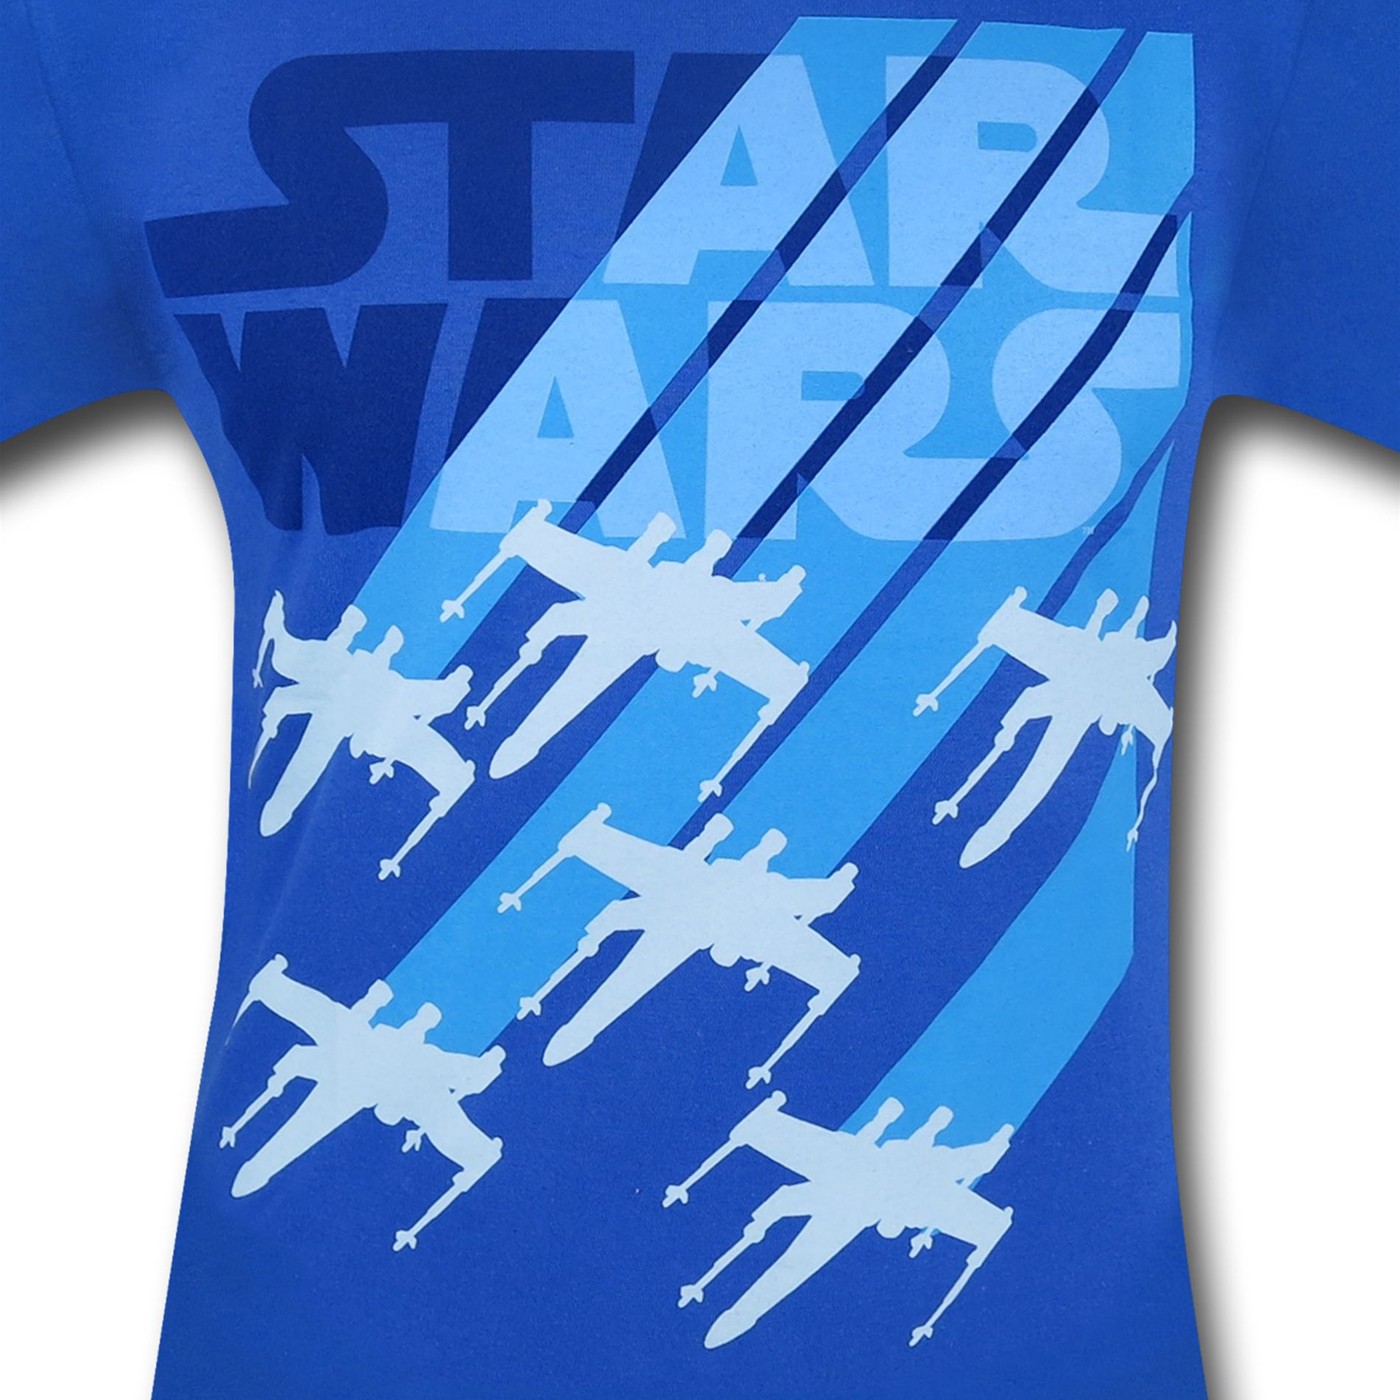 Star Wars Geo Fighters Kids T-Shirt